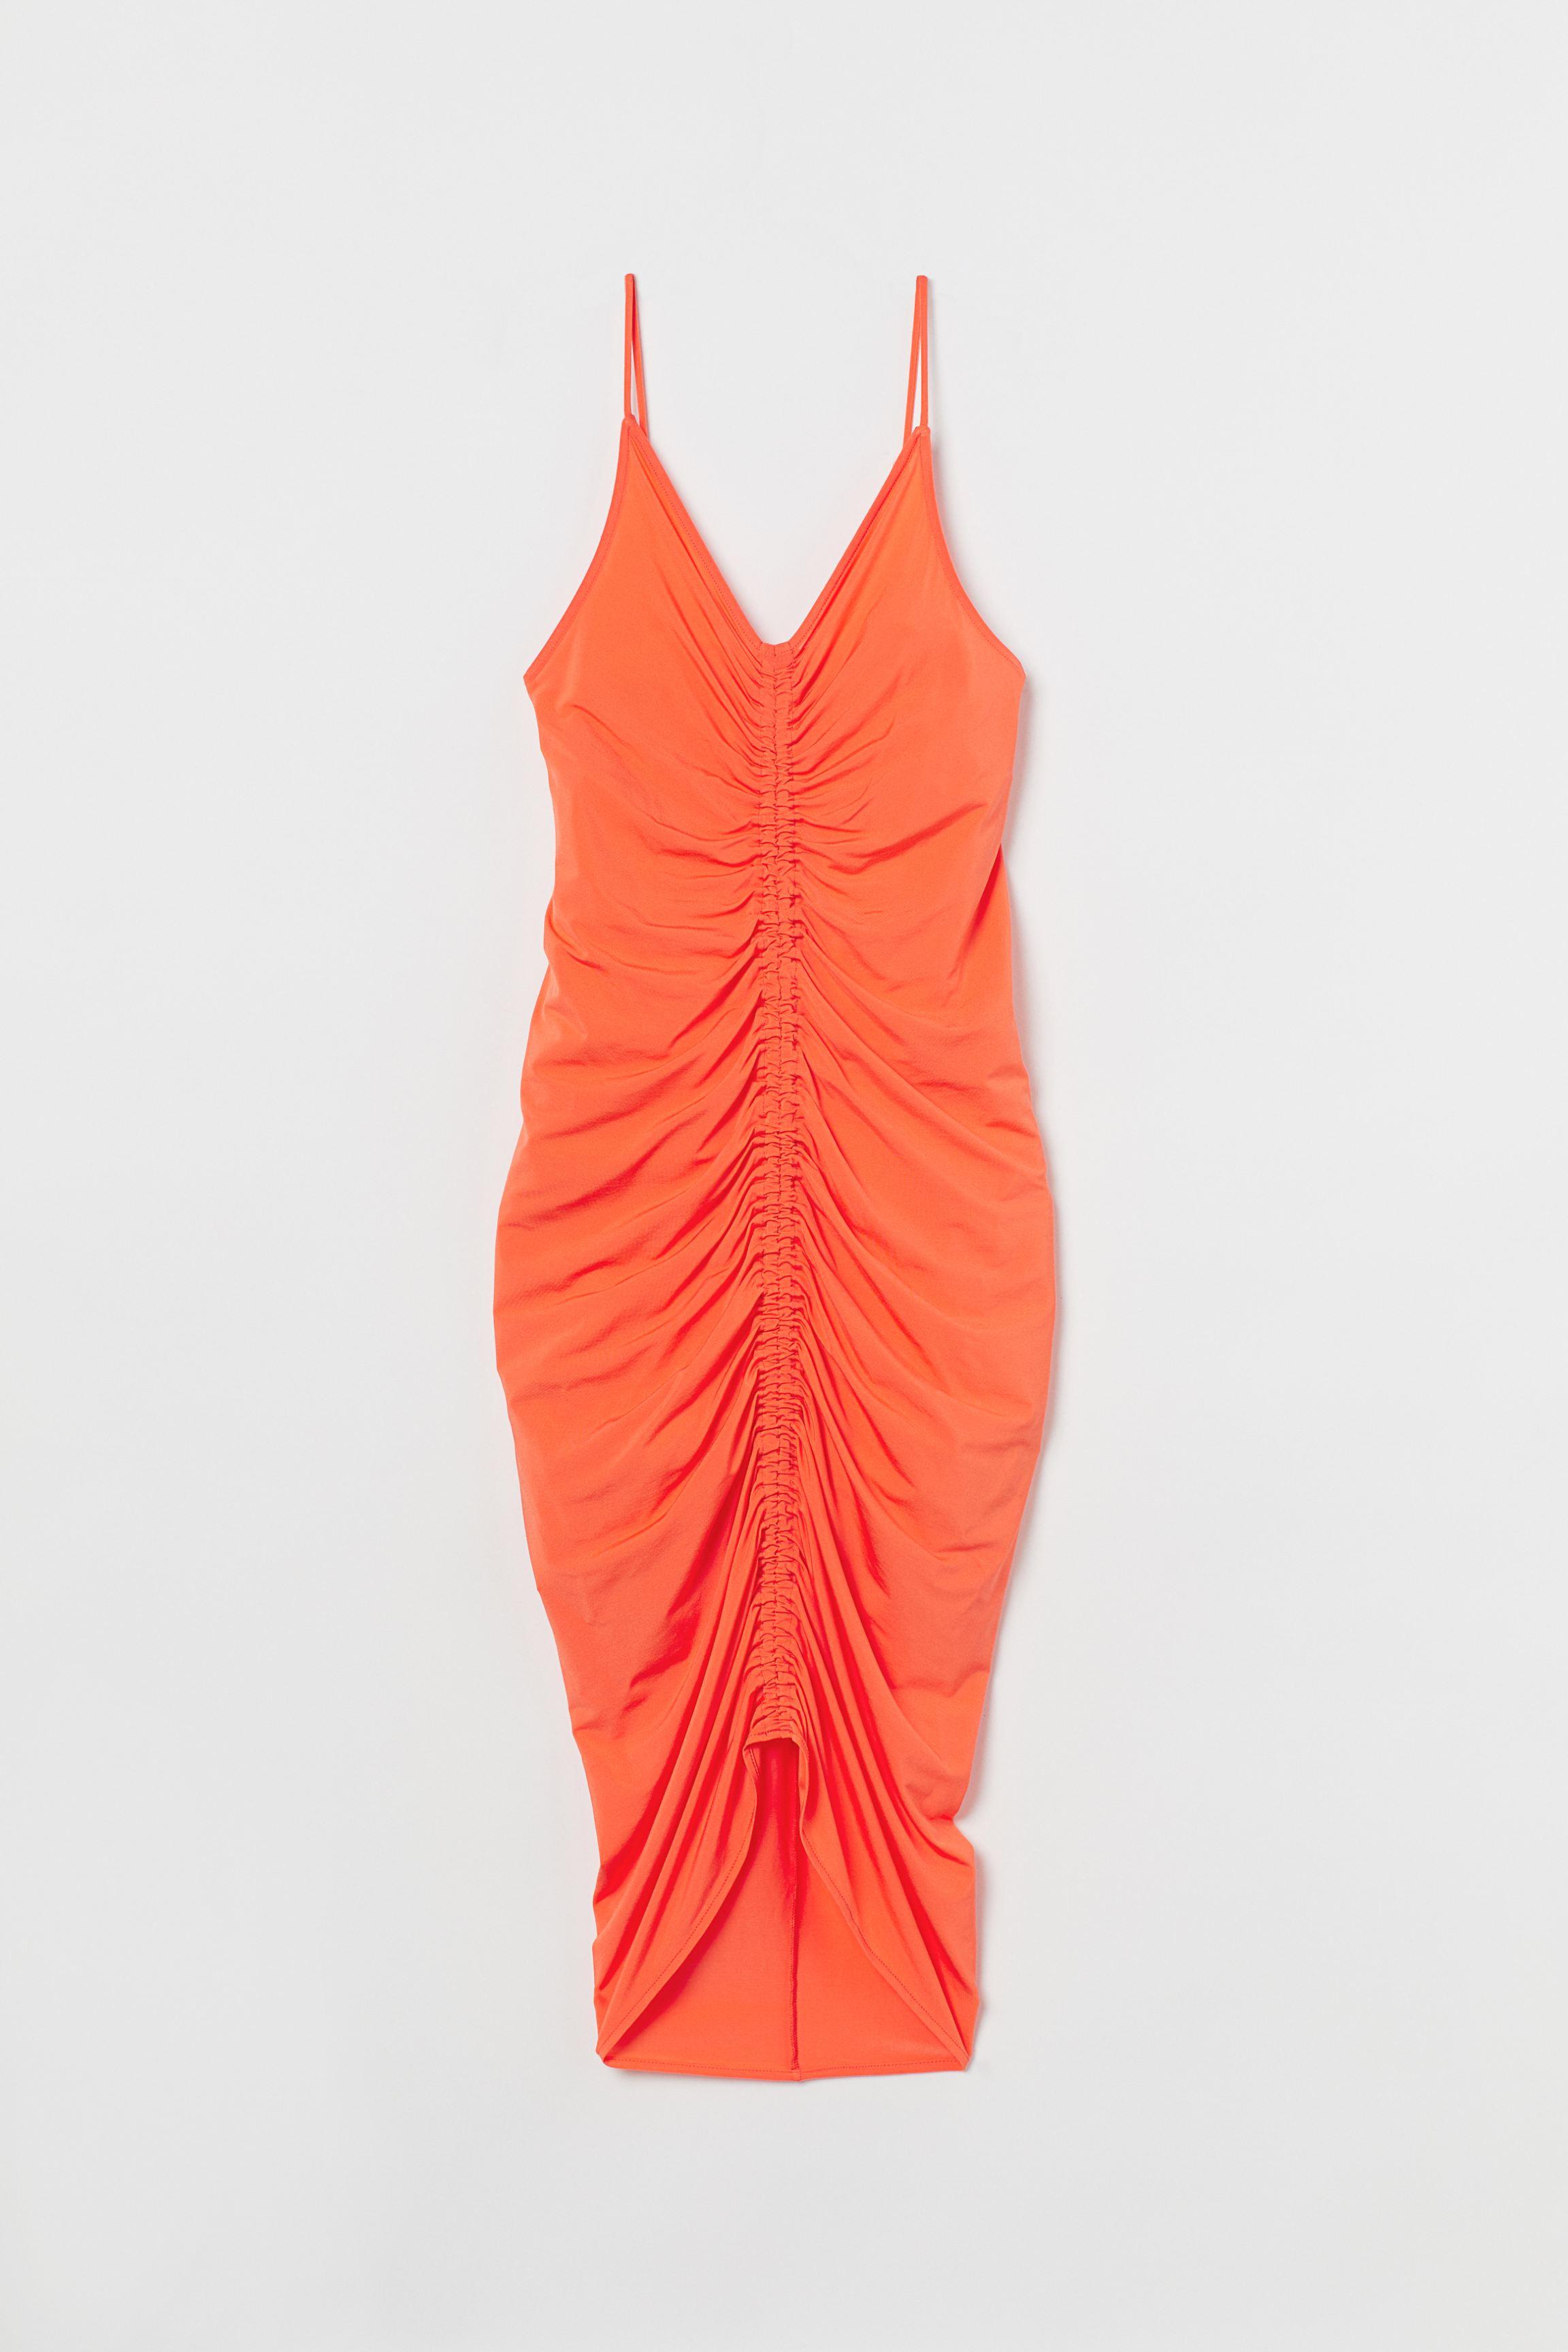 H☀M Synthetic Draped Dress in Orange | Lyst